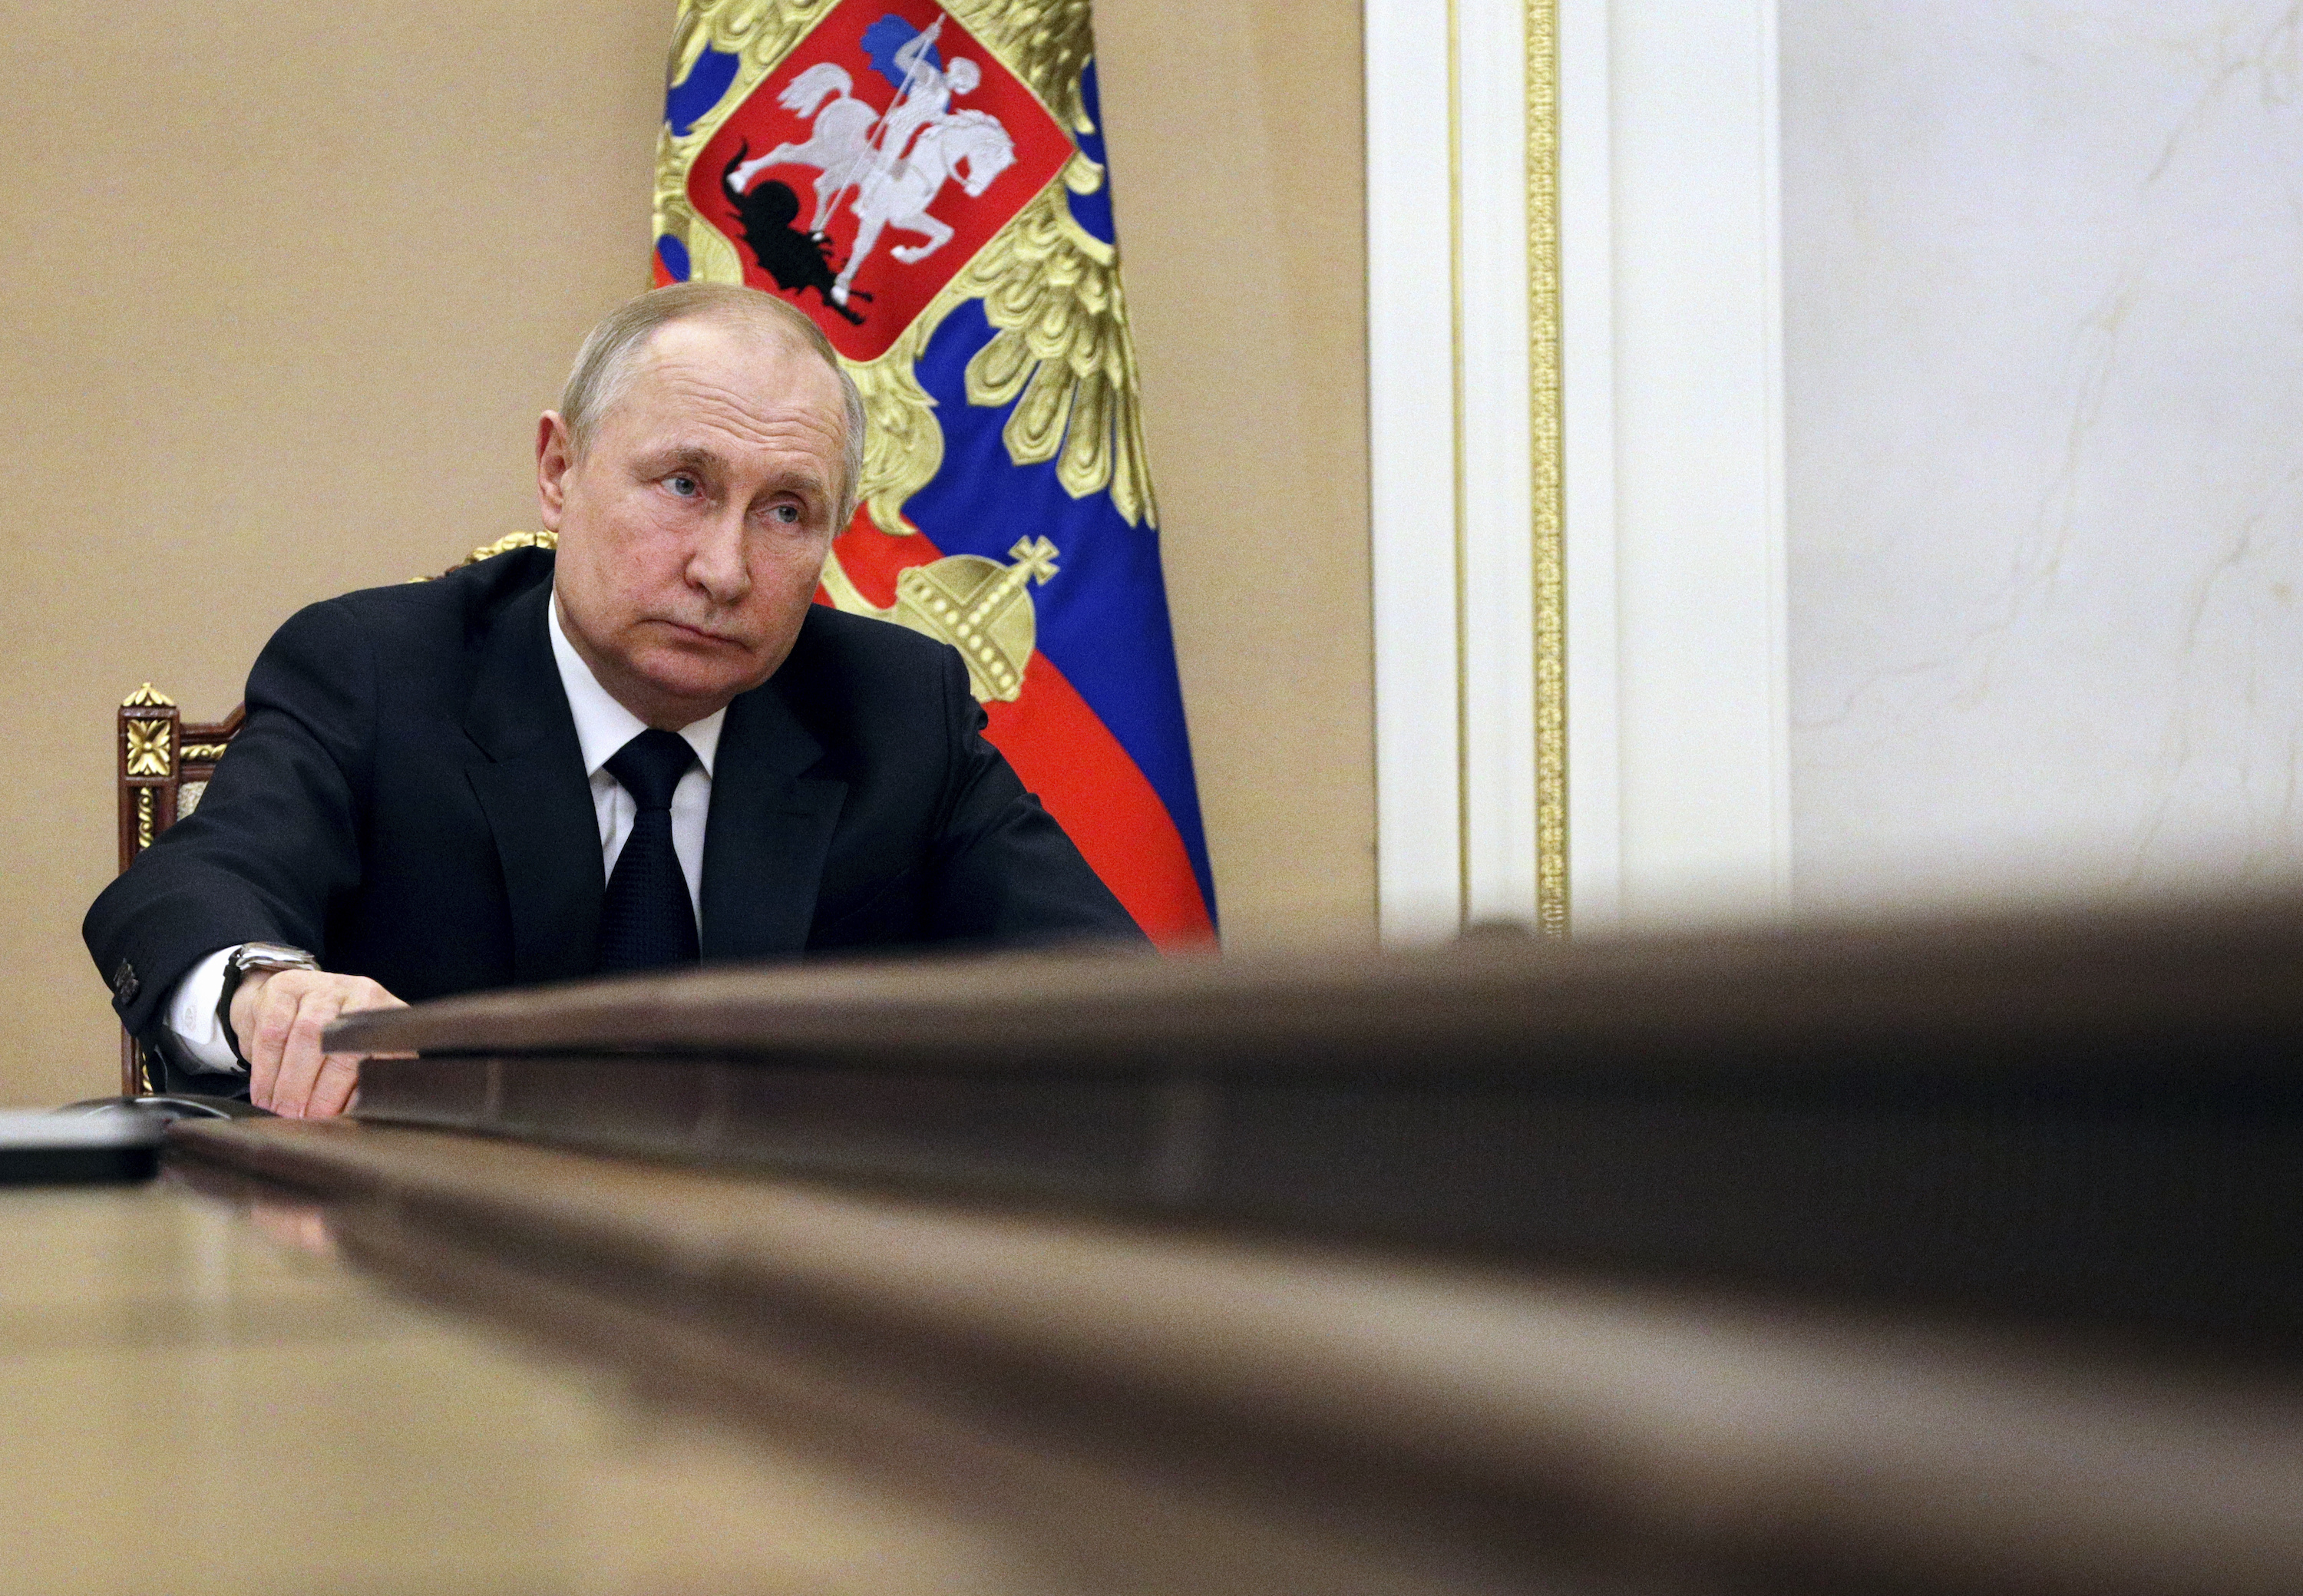 Putin health नया दावा: सात सीढ़ियां फिसल कर गिरे रूसी राष्ट्रपति पुतिन, स्वास्थ्य पर फिर अटकलें